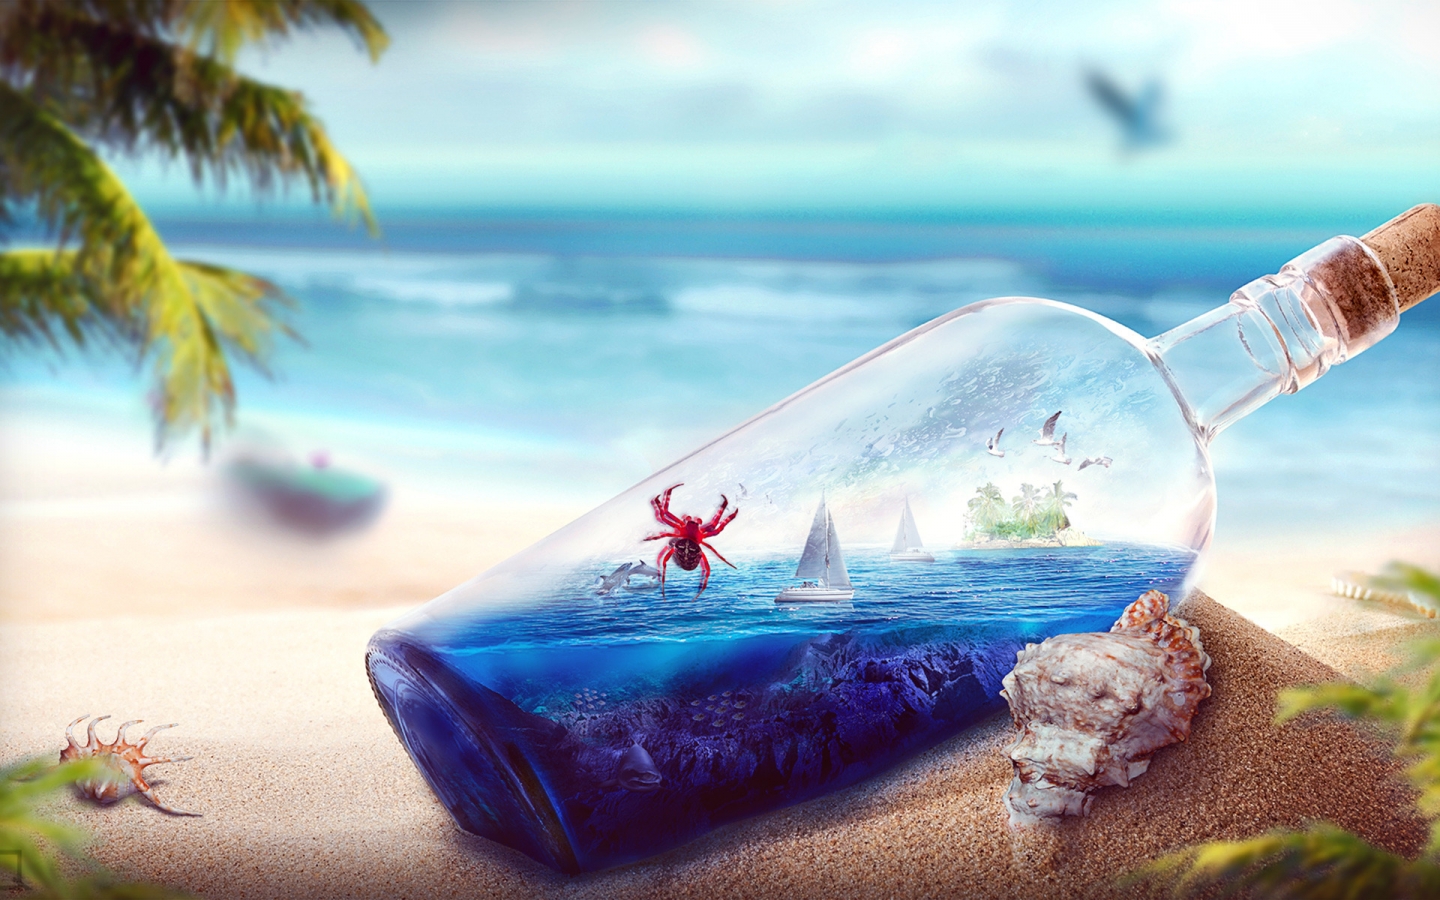 Ocean in a Bottle for 1440 x 900 widescreen resolution